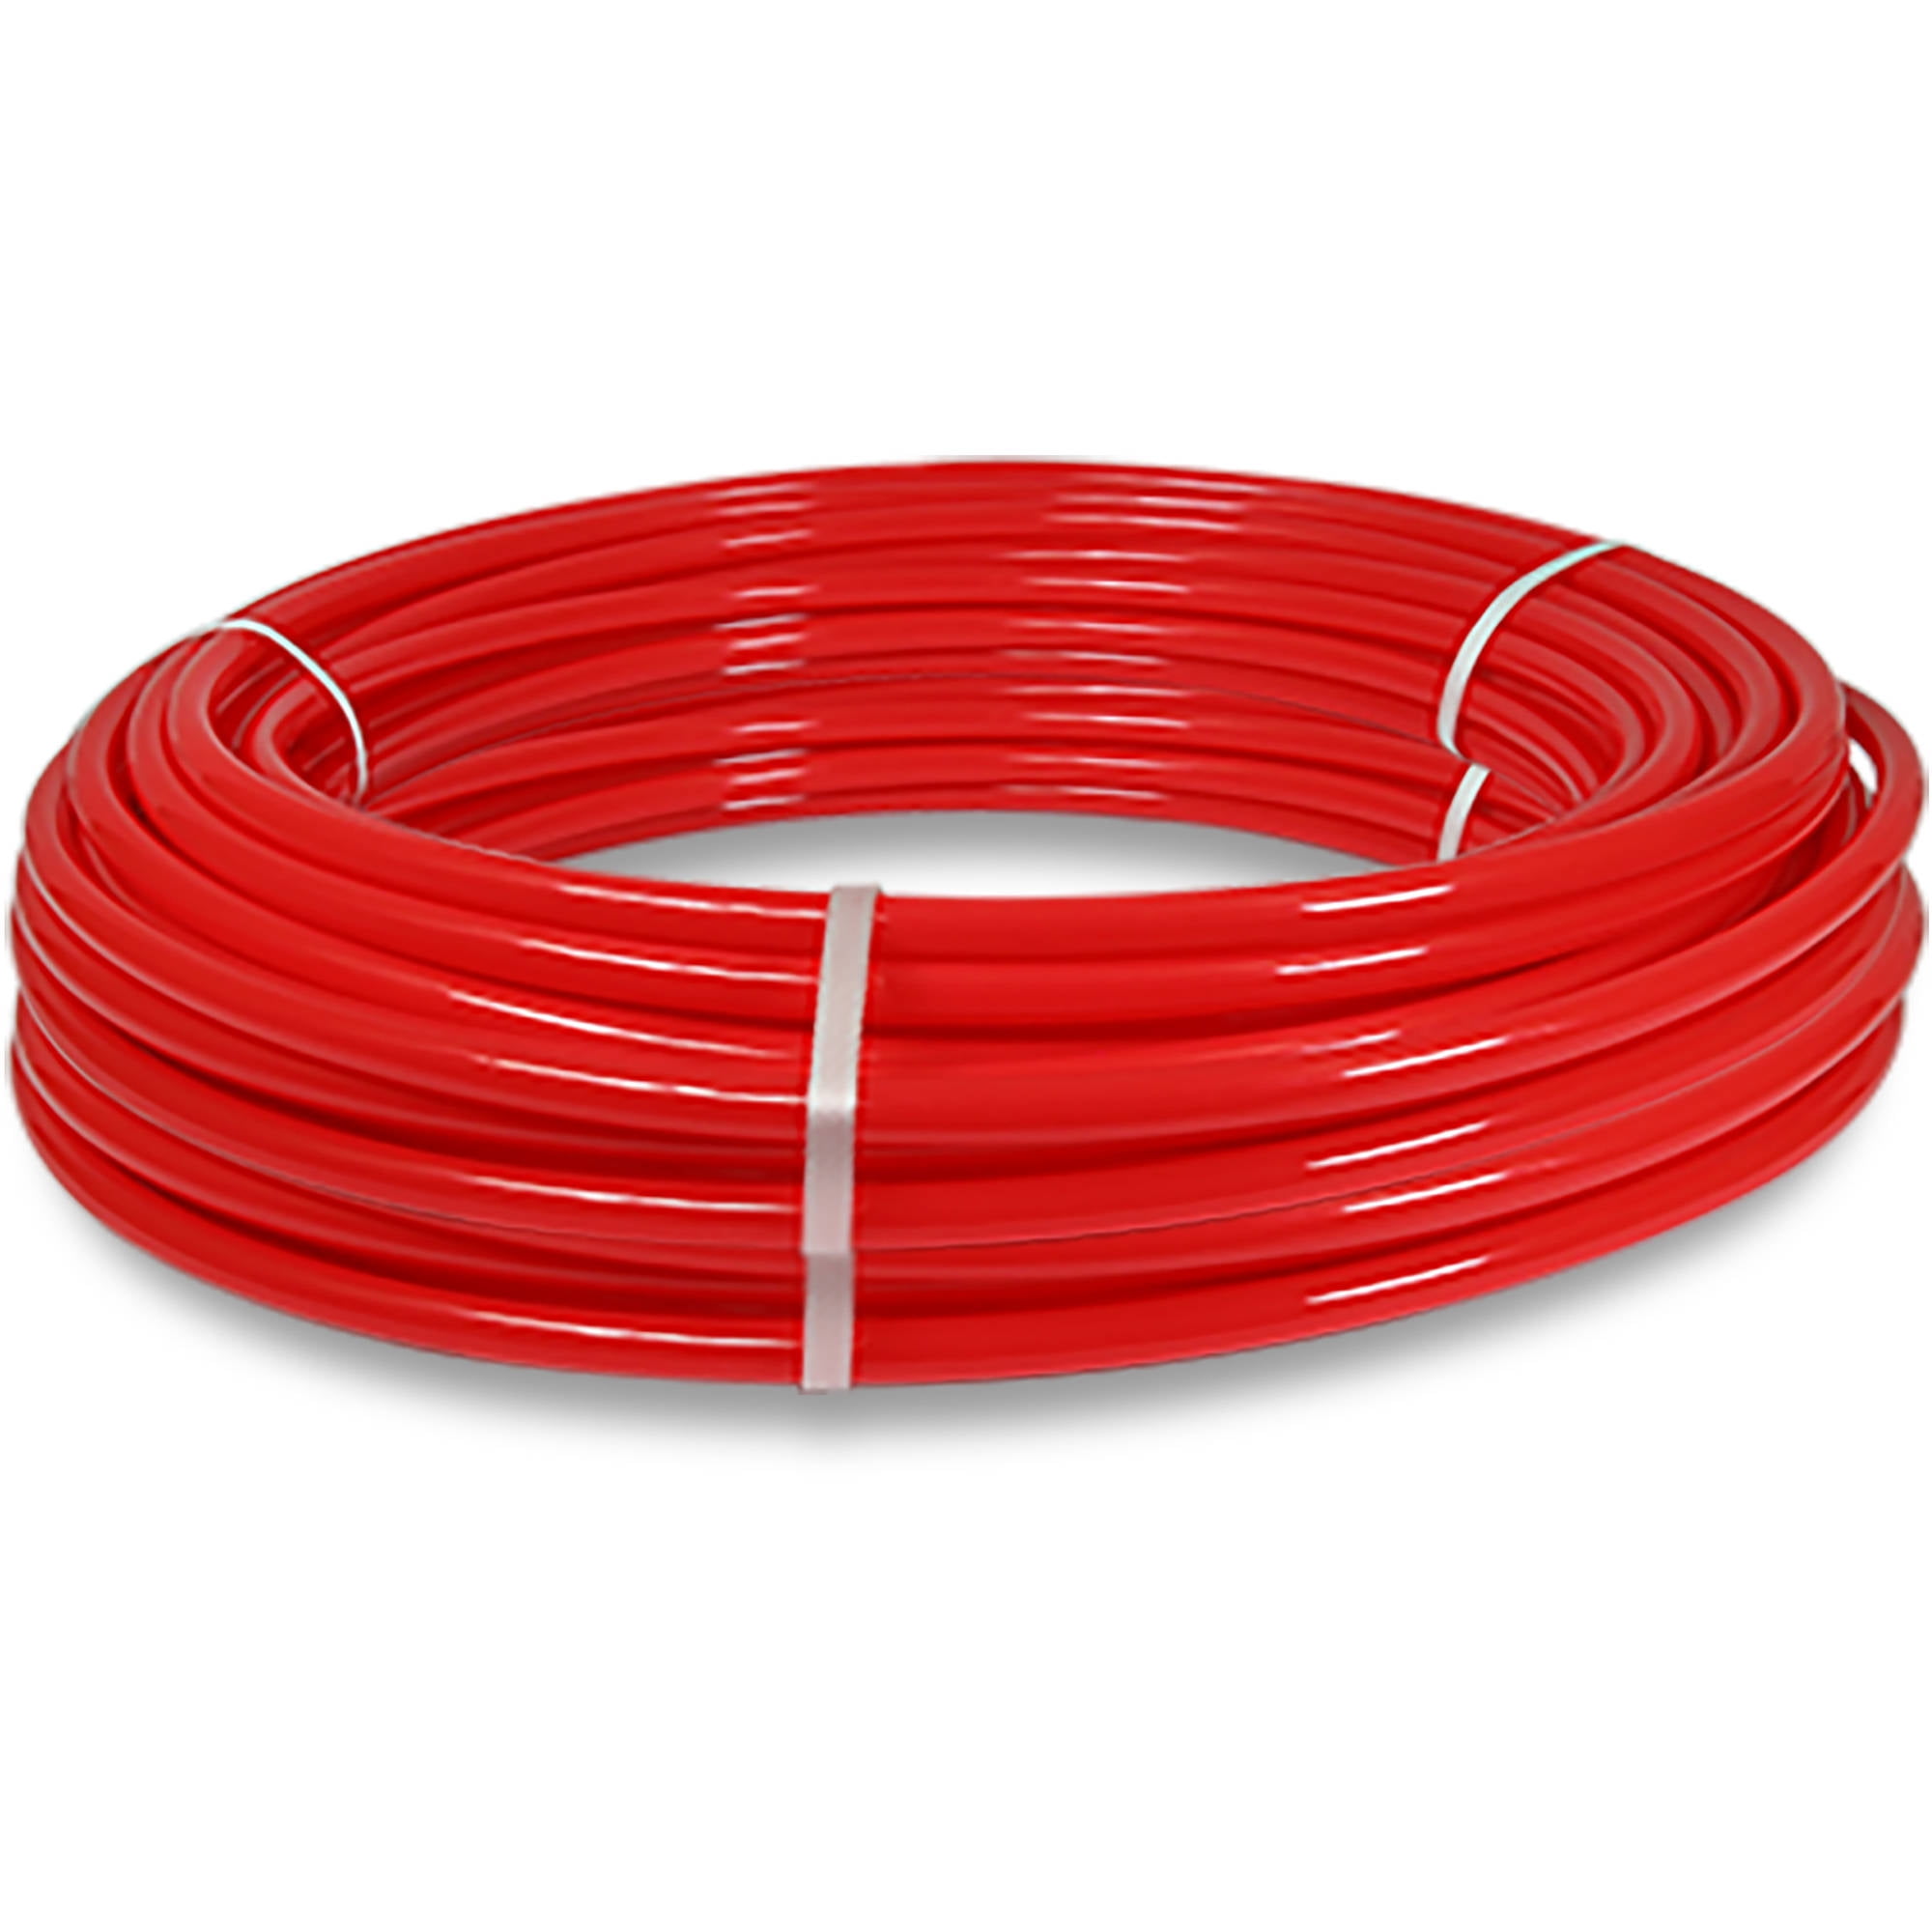 Red Pexflow PFW-R12100 PEX Potable Water Tubing Pipe 1/2 Inch X 100 Feet 